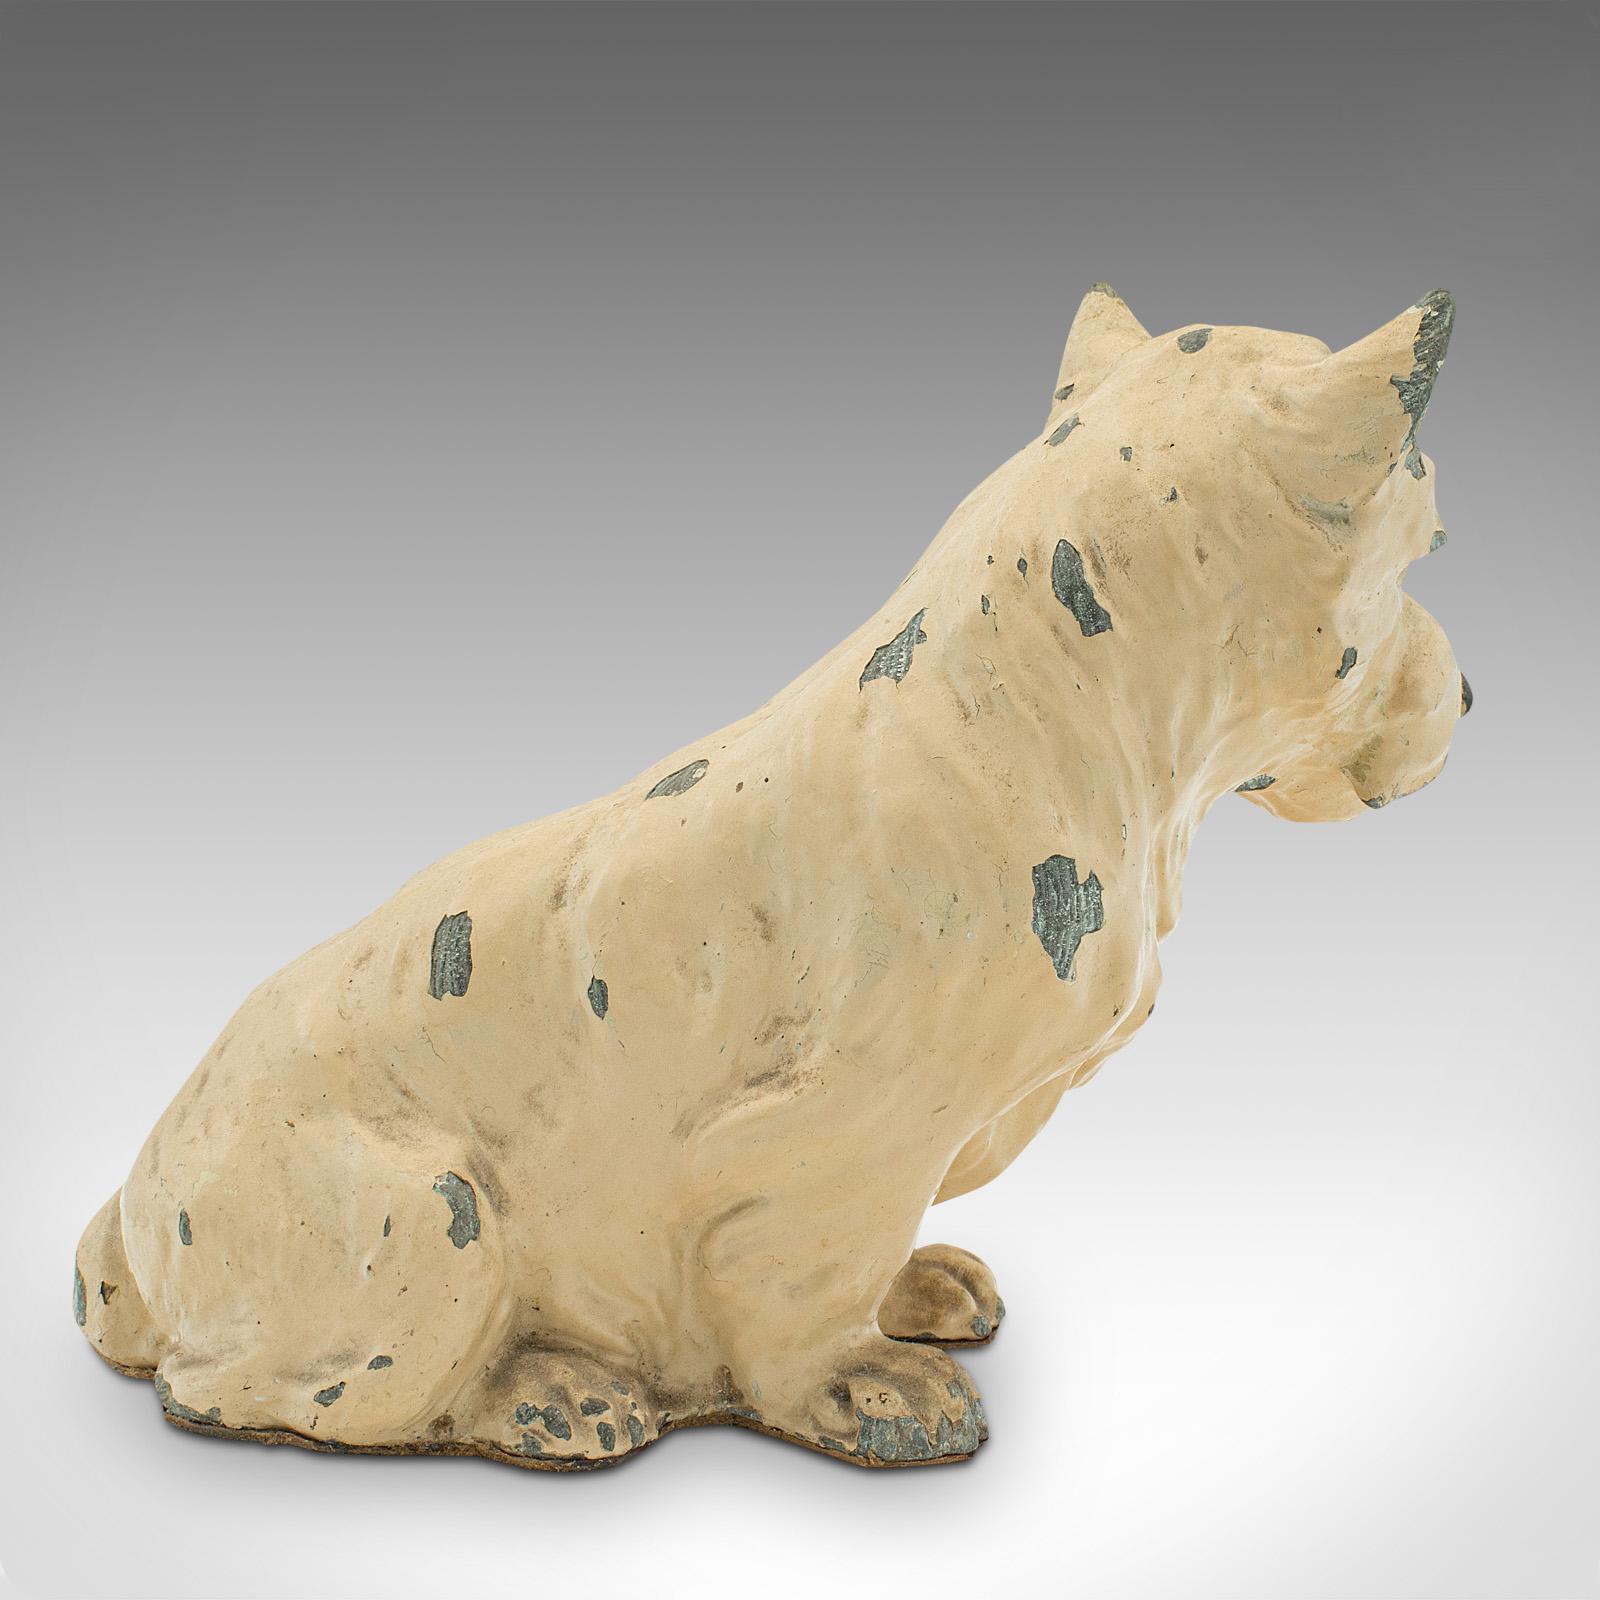 Antique Decorative Westie Figure, British, Spelter, Terrier, Ornament, Edwardian 1